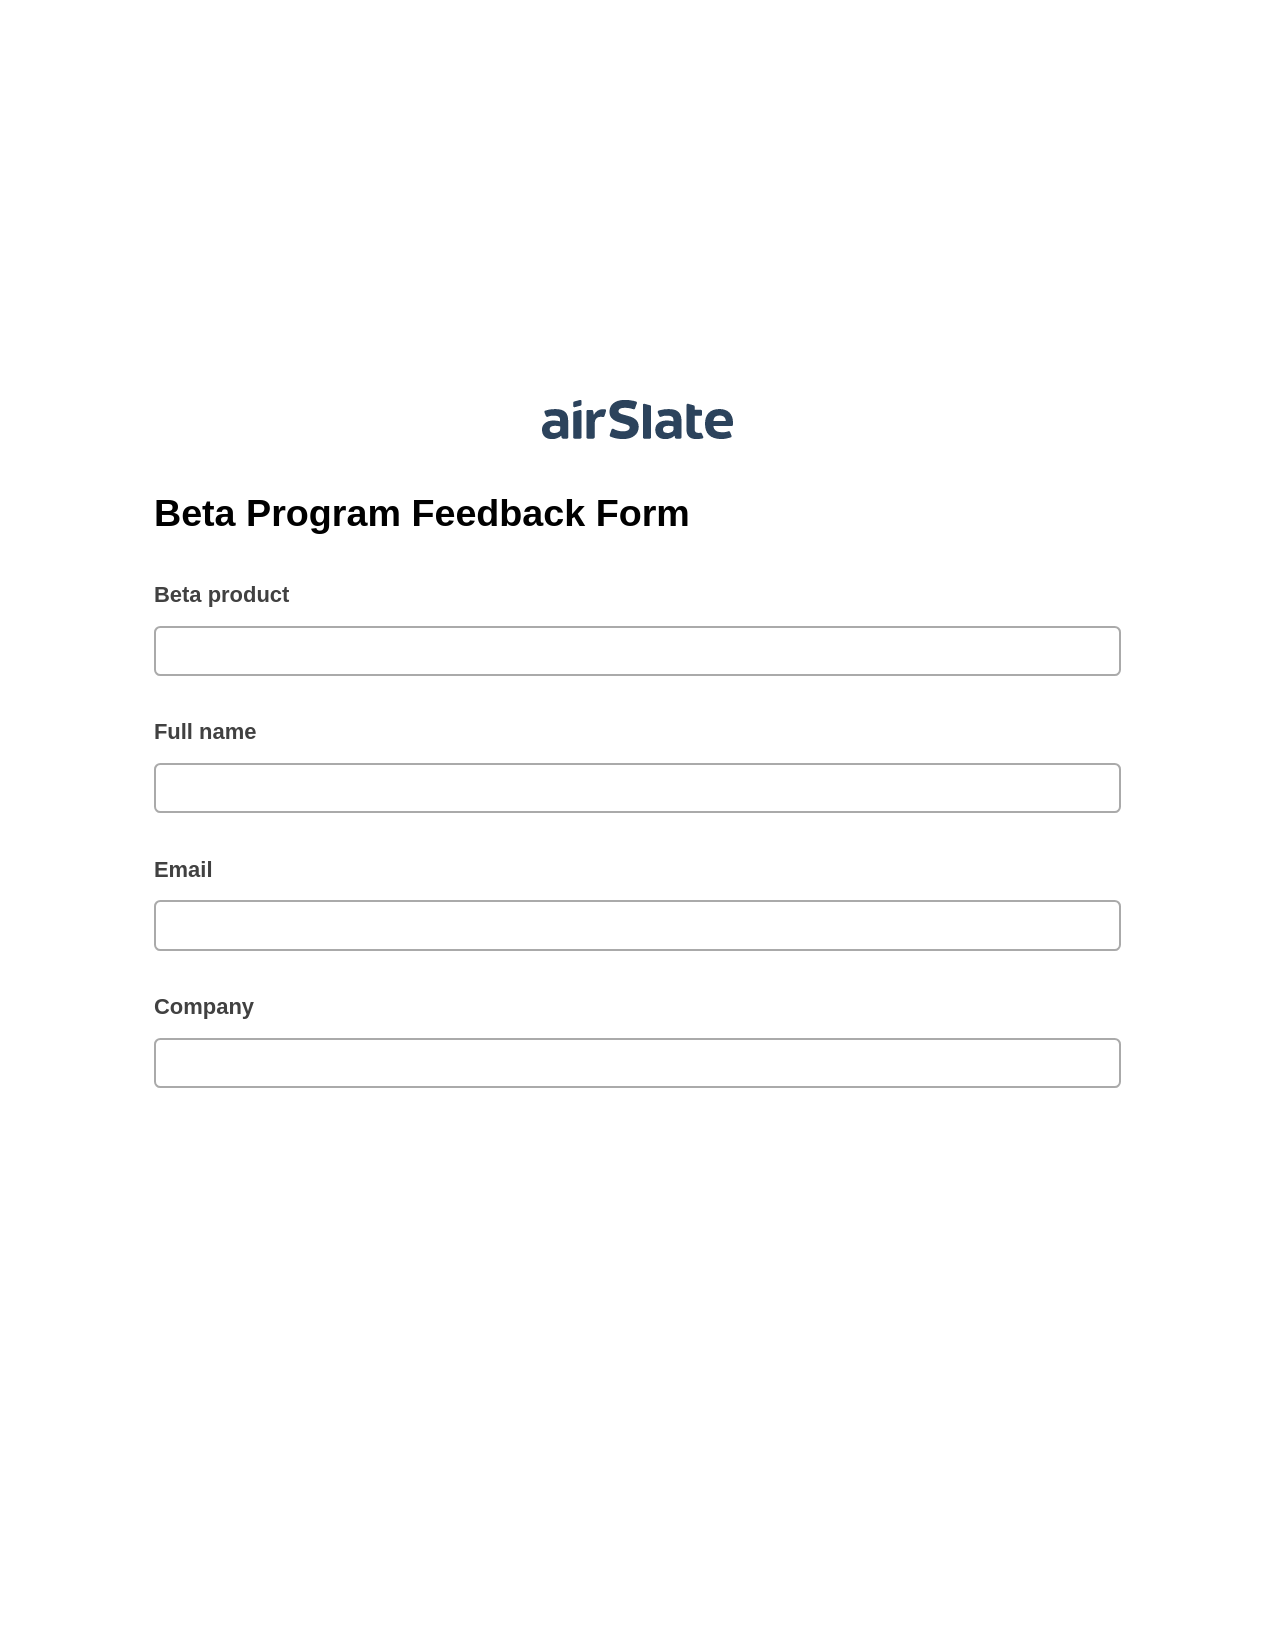 Multirole Beta Program Feedback Form Pre-fill Document Bot, Assign Slate Name Bot, Slack Notification Postfinish Bot